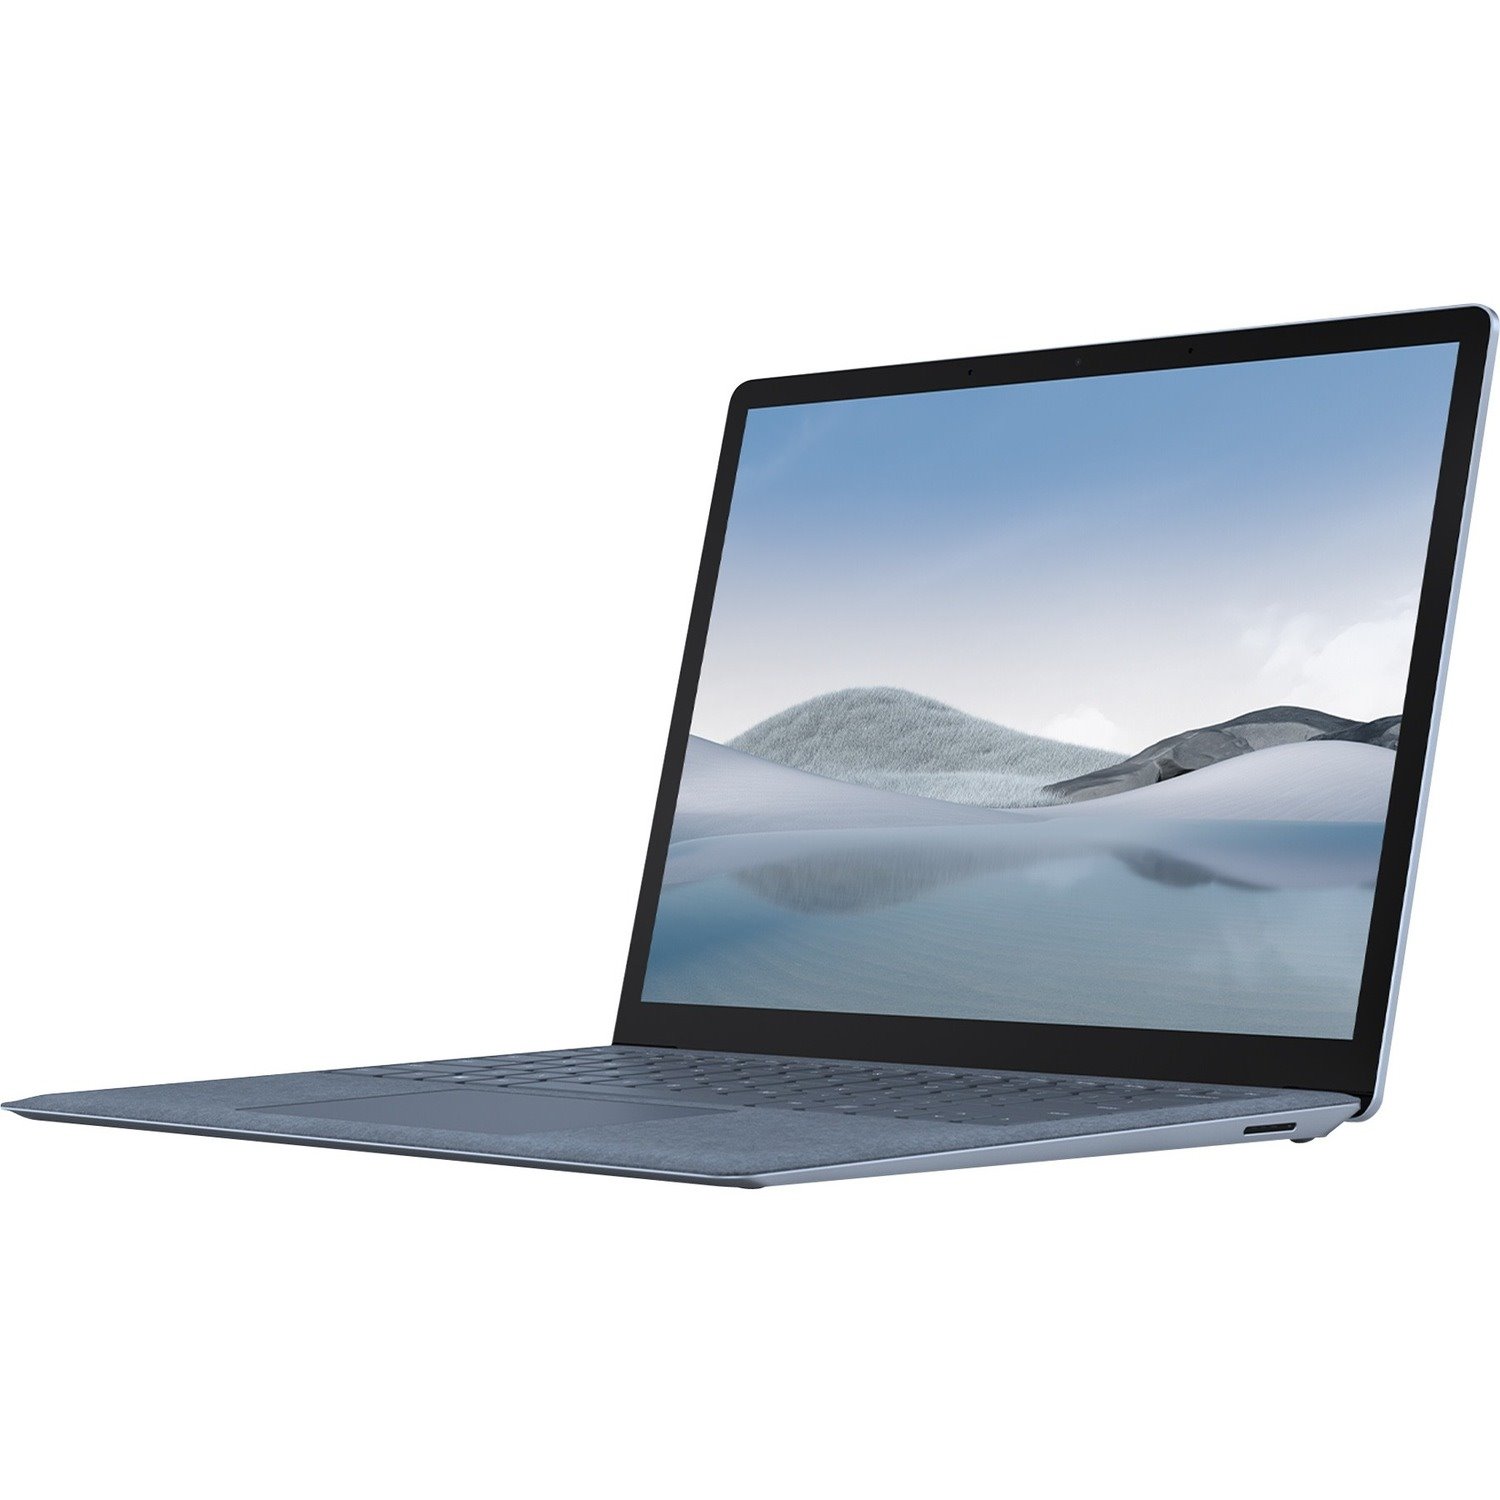 Microsoft Surface Laptop 4 34.3 cm (13.5") Touchscreen Notebook - 2256 x 1504 - Intel Core i5 - 8 GB Total RAM - 512 GB SSD - Ice Blue